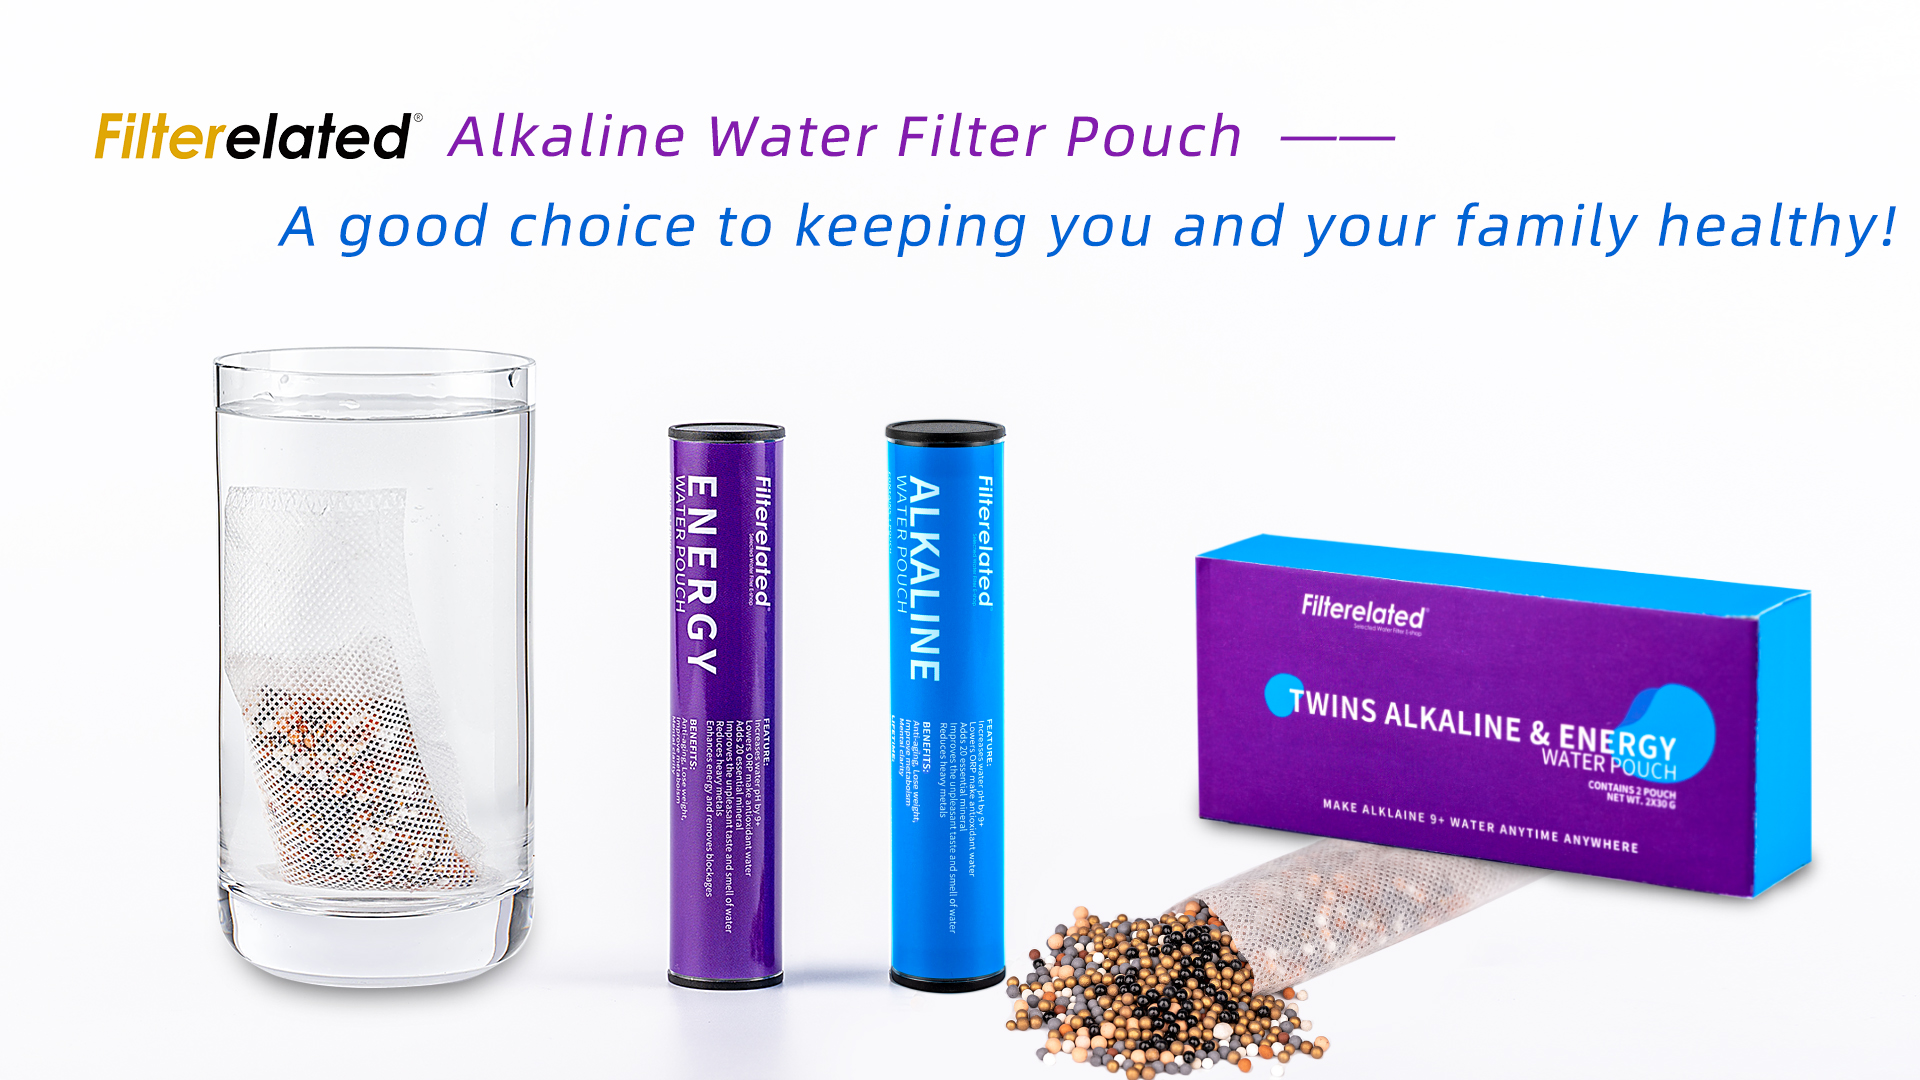 Filterelated alkaline water pouch